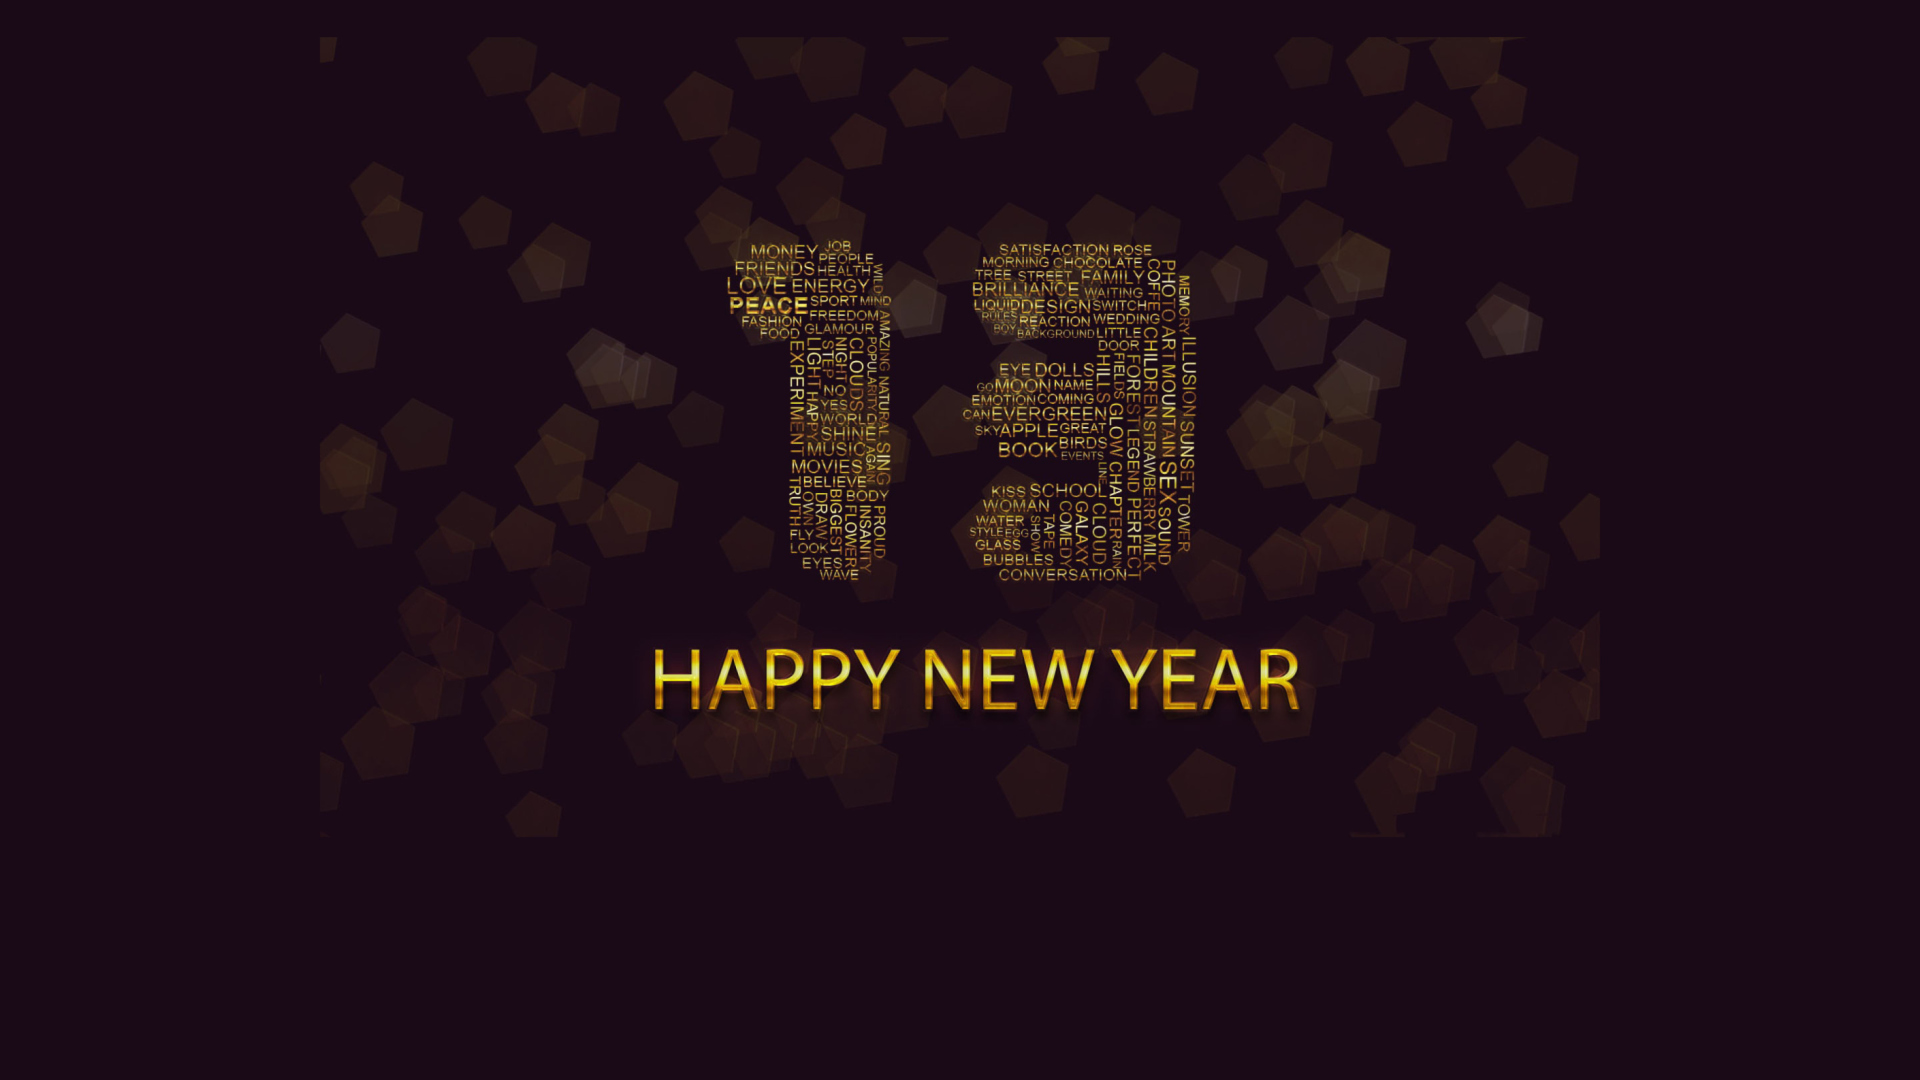 Happy New Year 2013 wallpaper 1920x1080